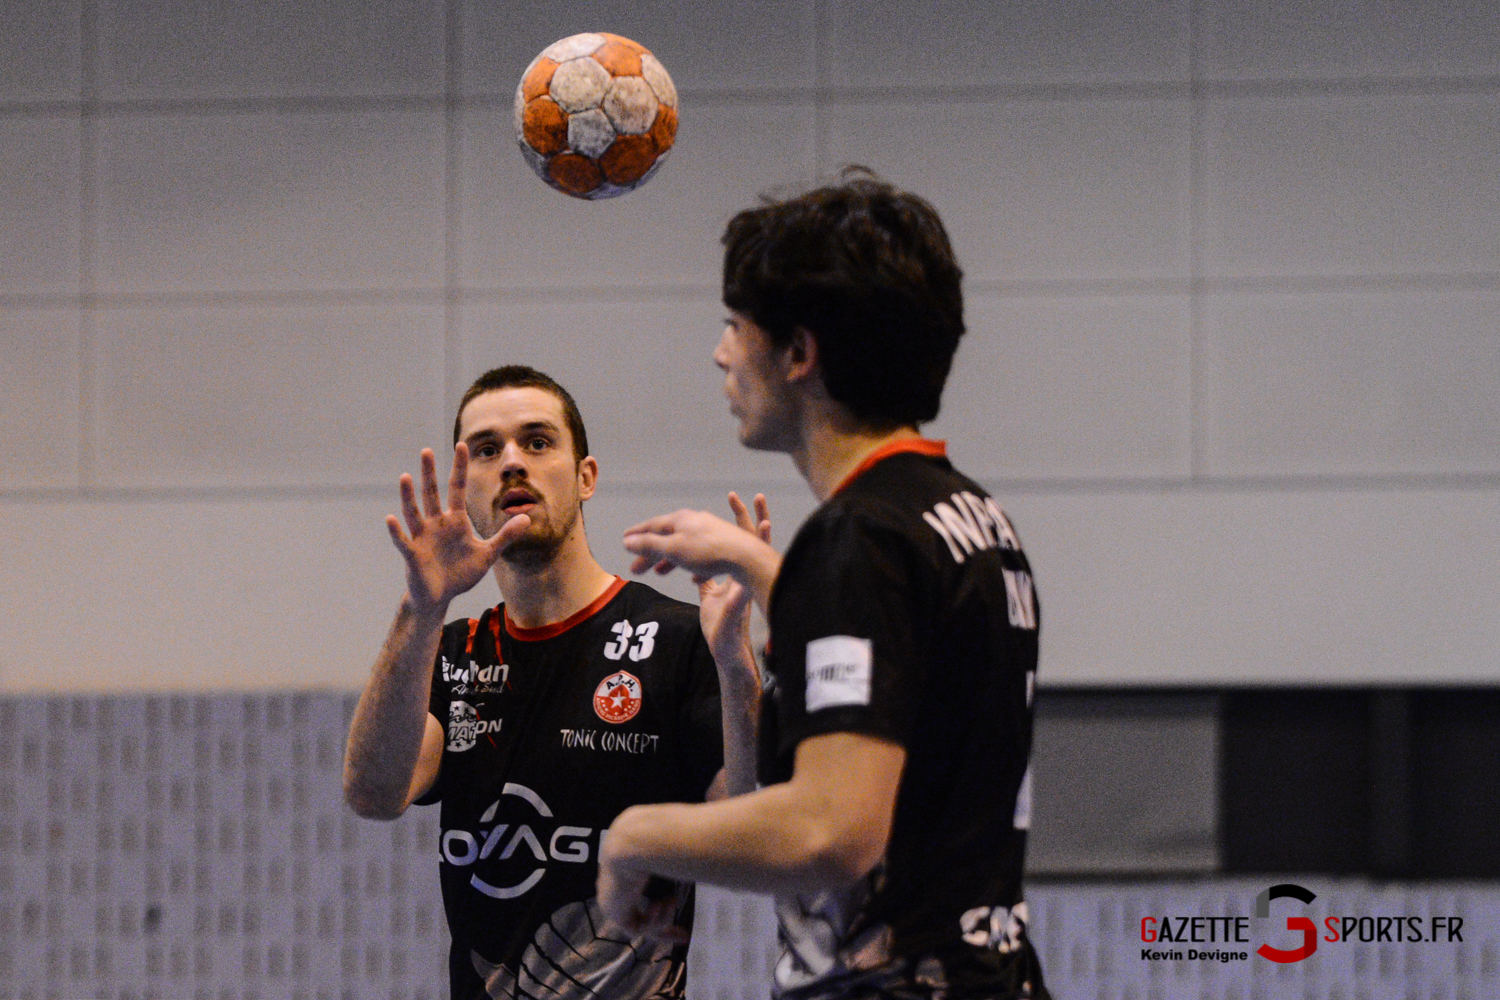 Handball Aph Vs Gonfreville Kevin Devigne 52